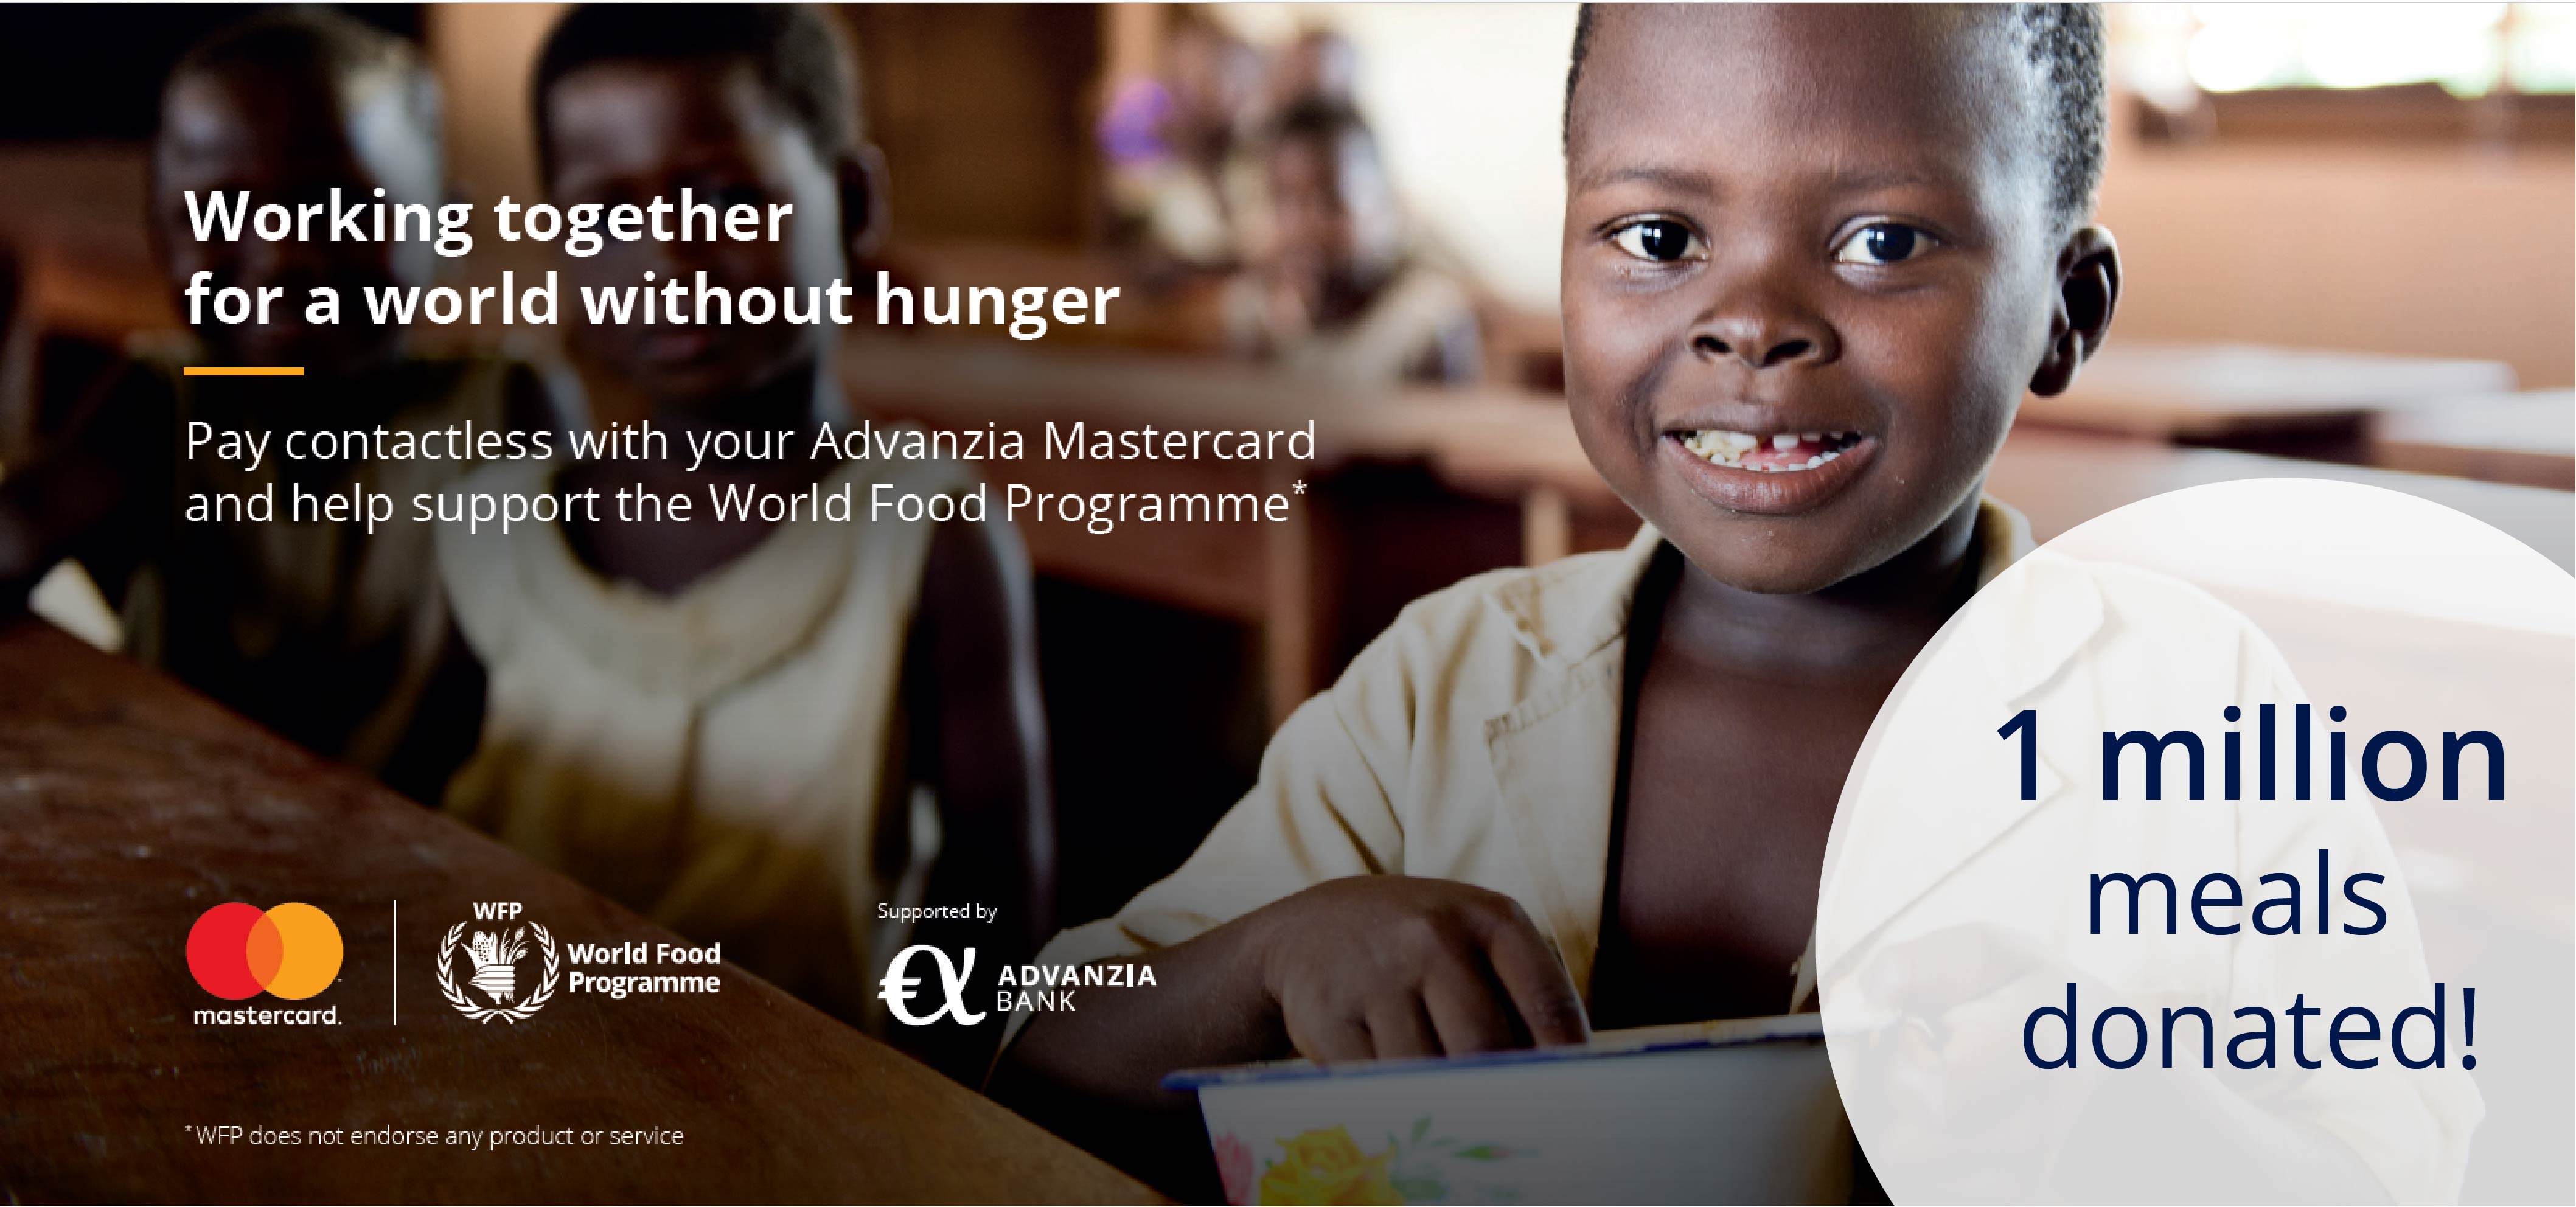 Advanzia and Mastercard donate 1 million meals to children in need